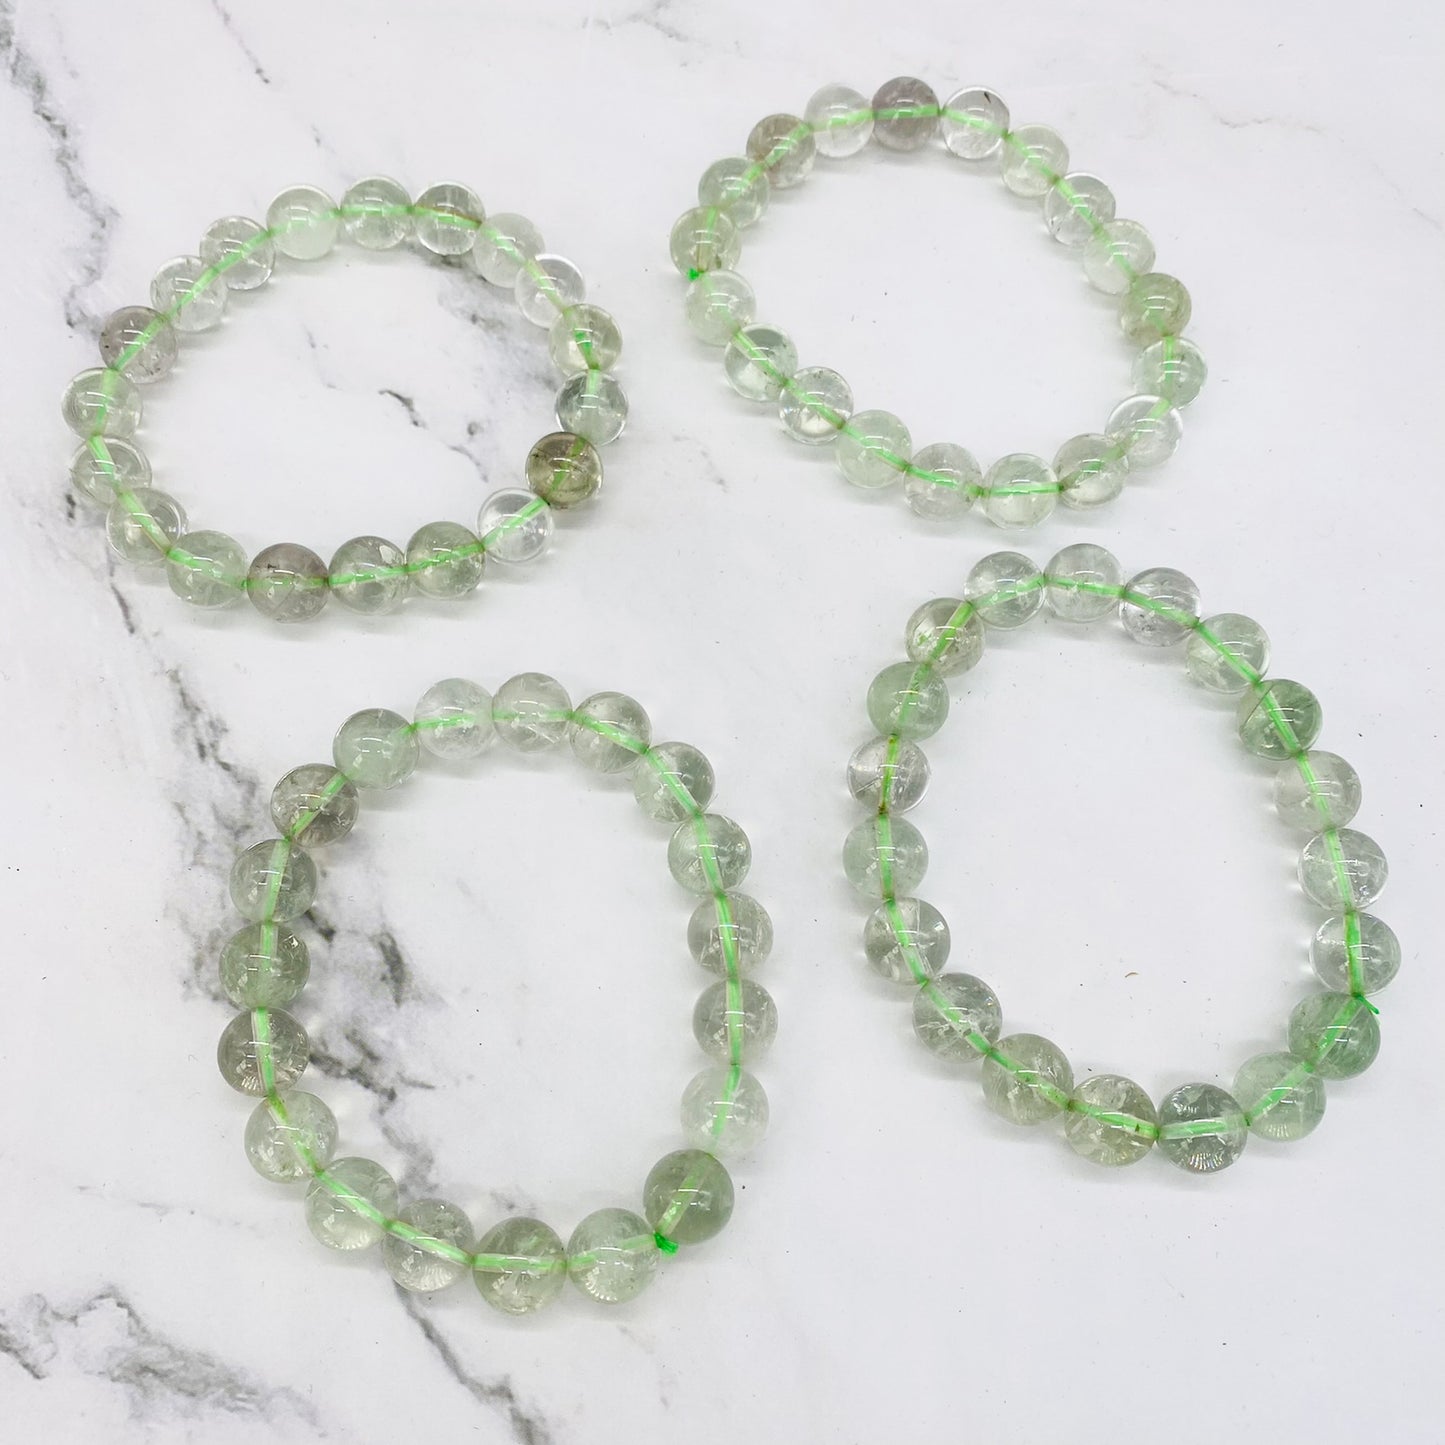 Green Prasiolite Bracelet, Unisex Crystal Beads, 10mm Beads, Stretchy Gemstone Bracelet, Healing Stretch Bracelet, Stone for Love